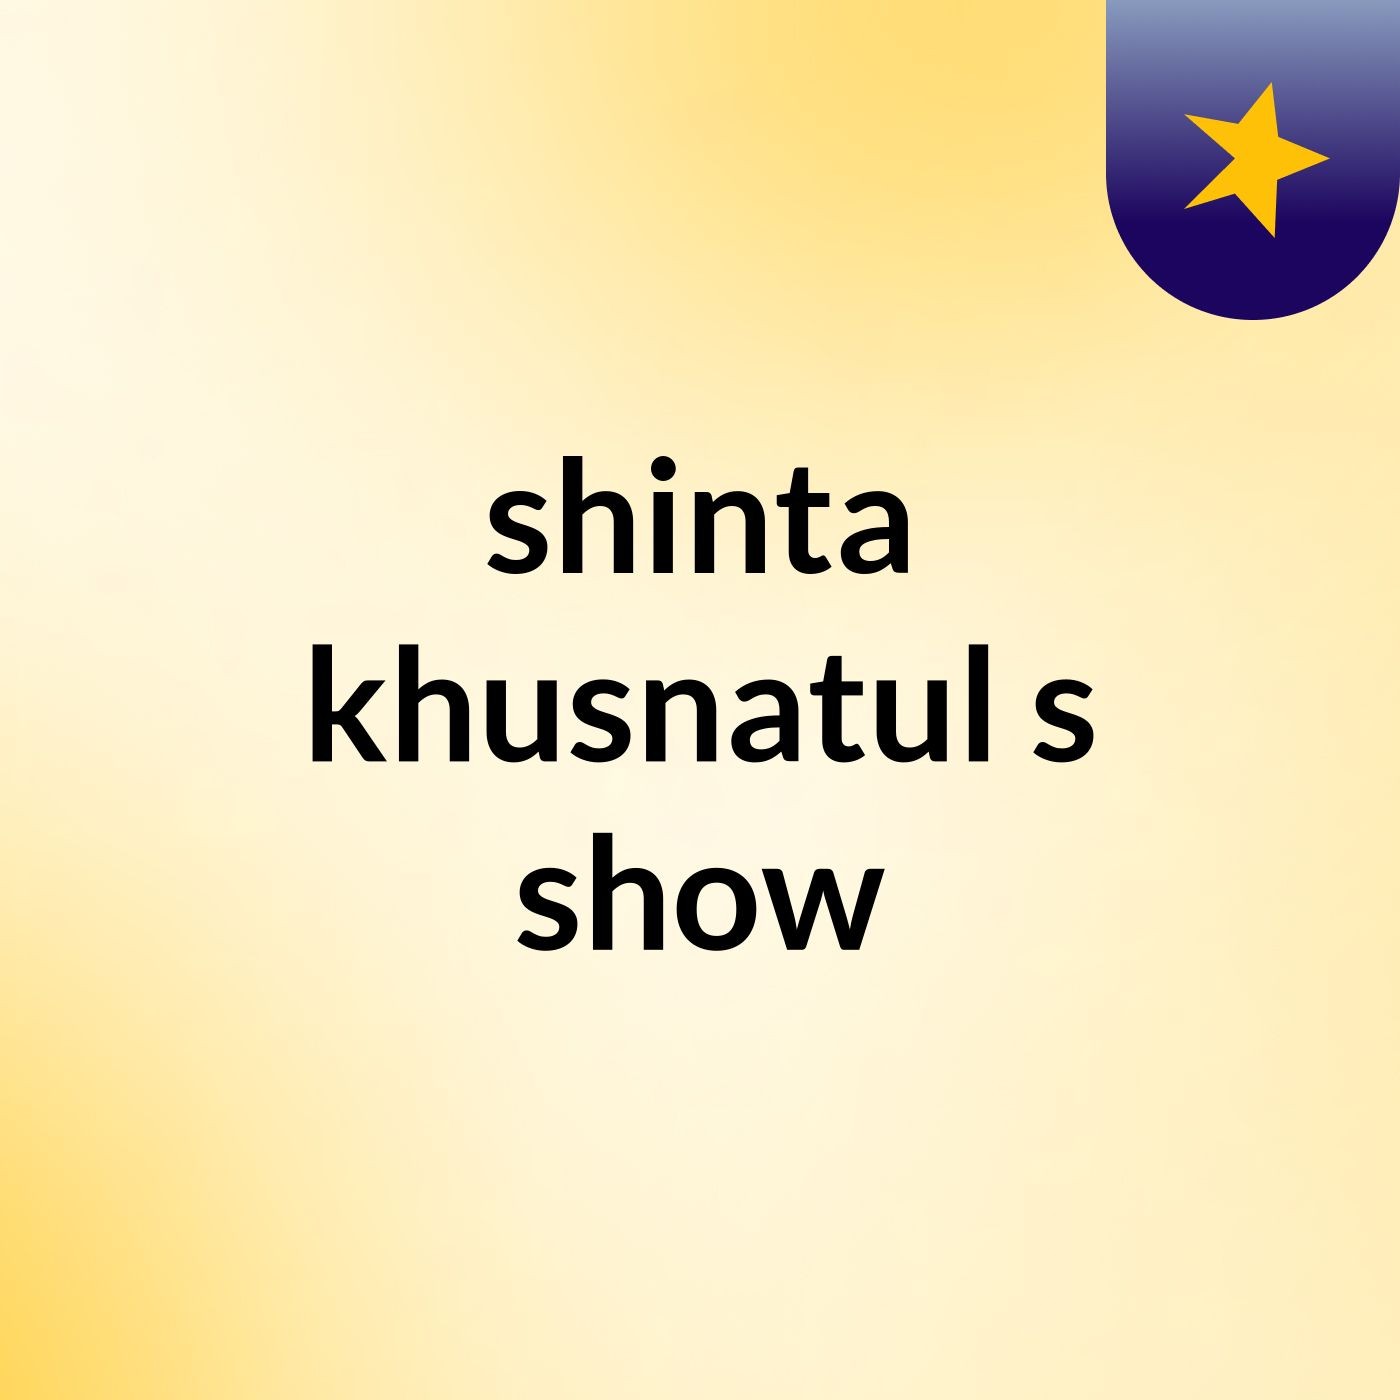 Episode 33 - shinta khusnatul's show